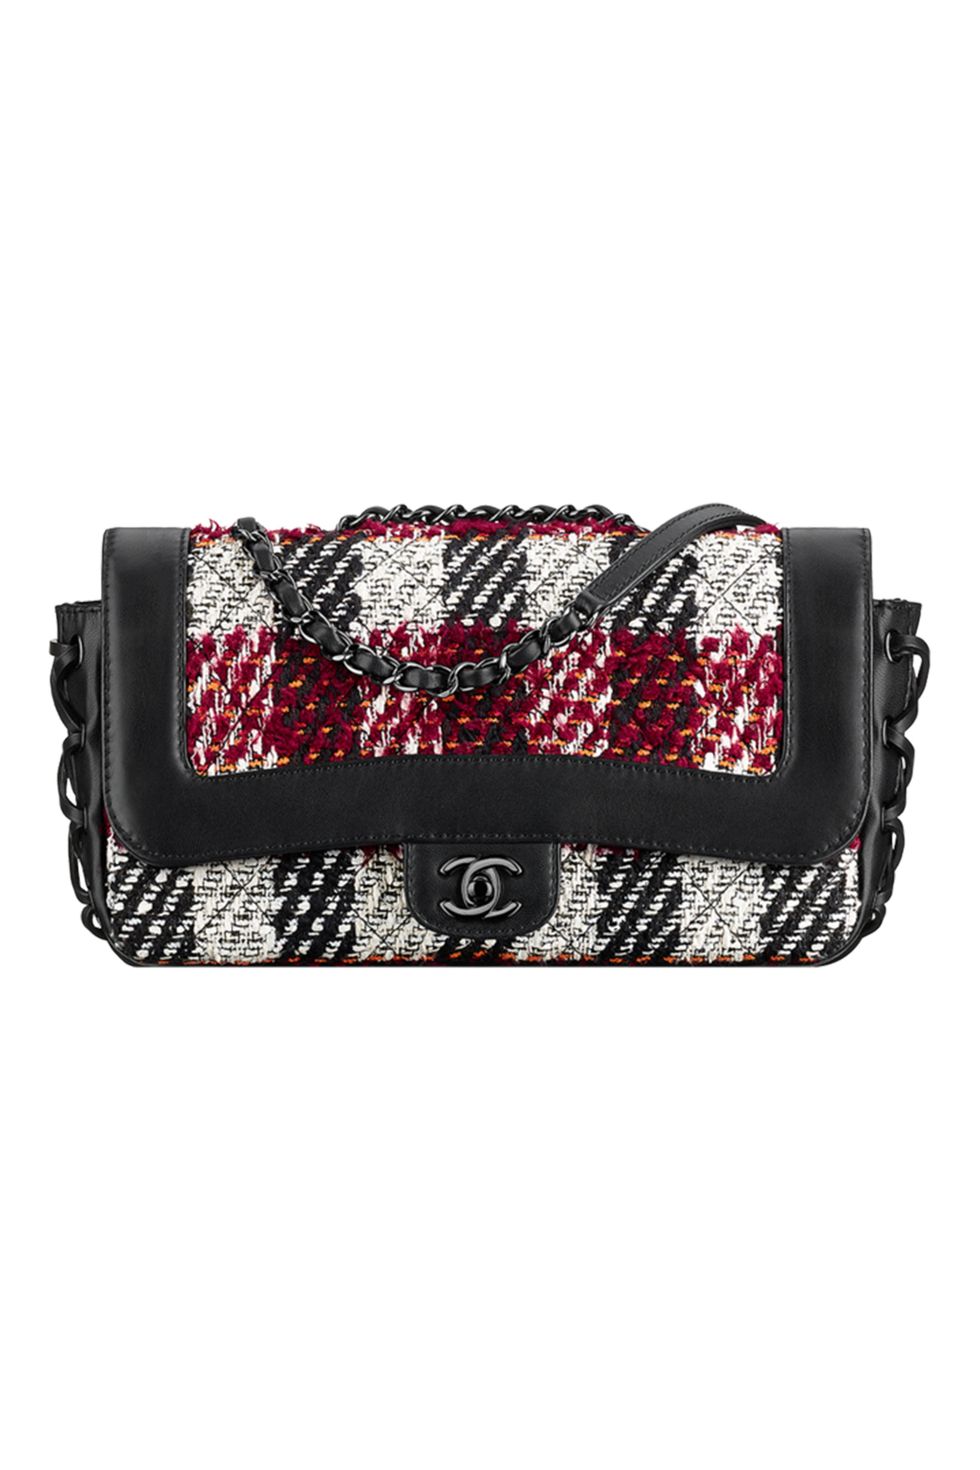 Chanel tweed bag